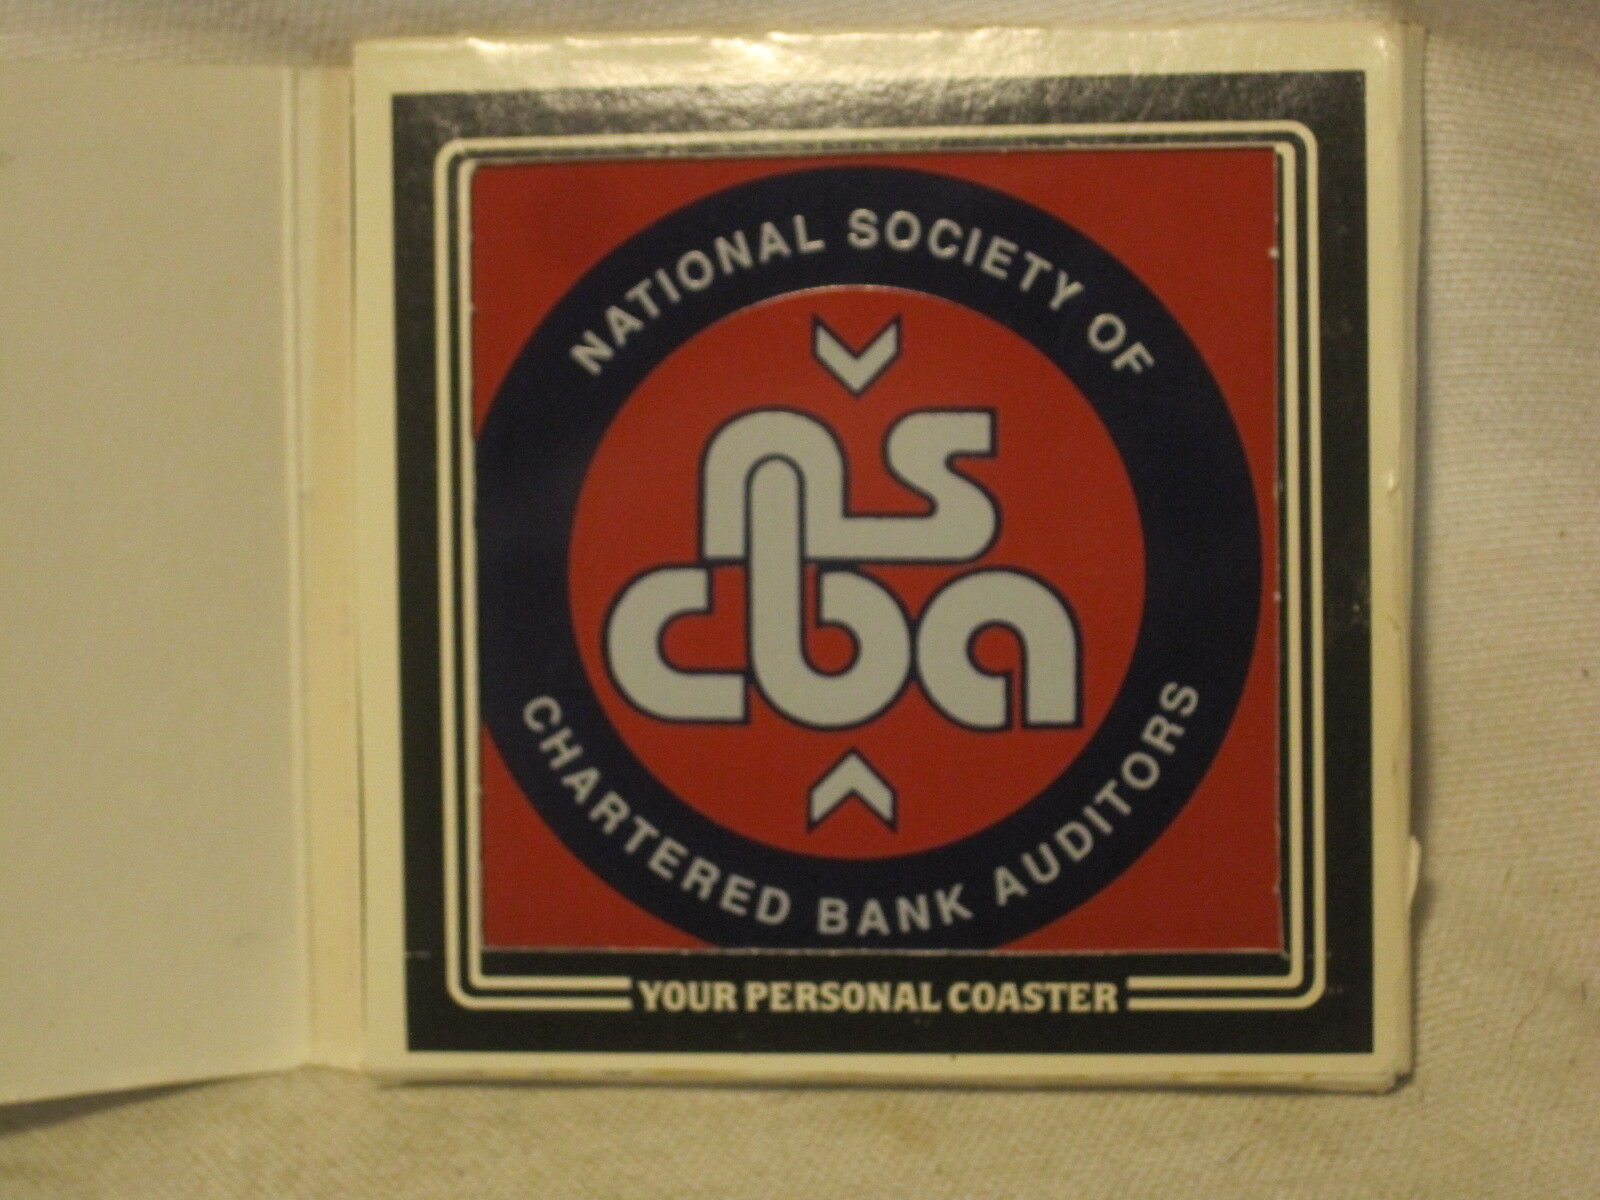 National Society of Chartered Bank Auditors NSCBA coaster banking CERAMA-CARD 